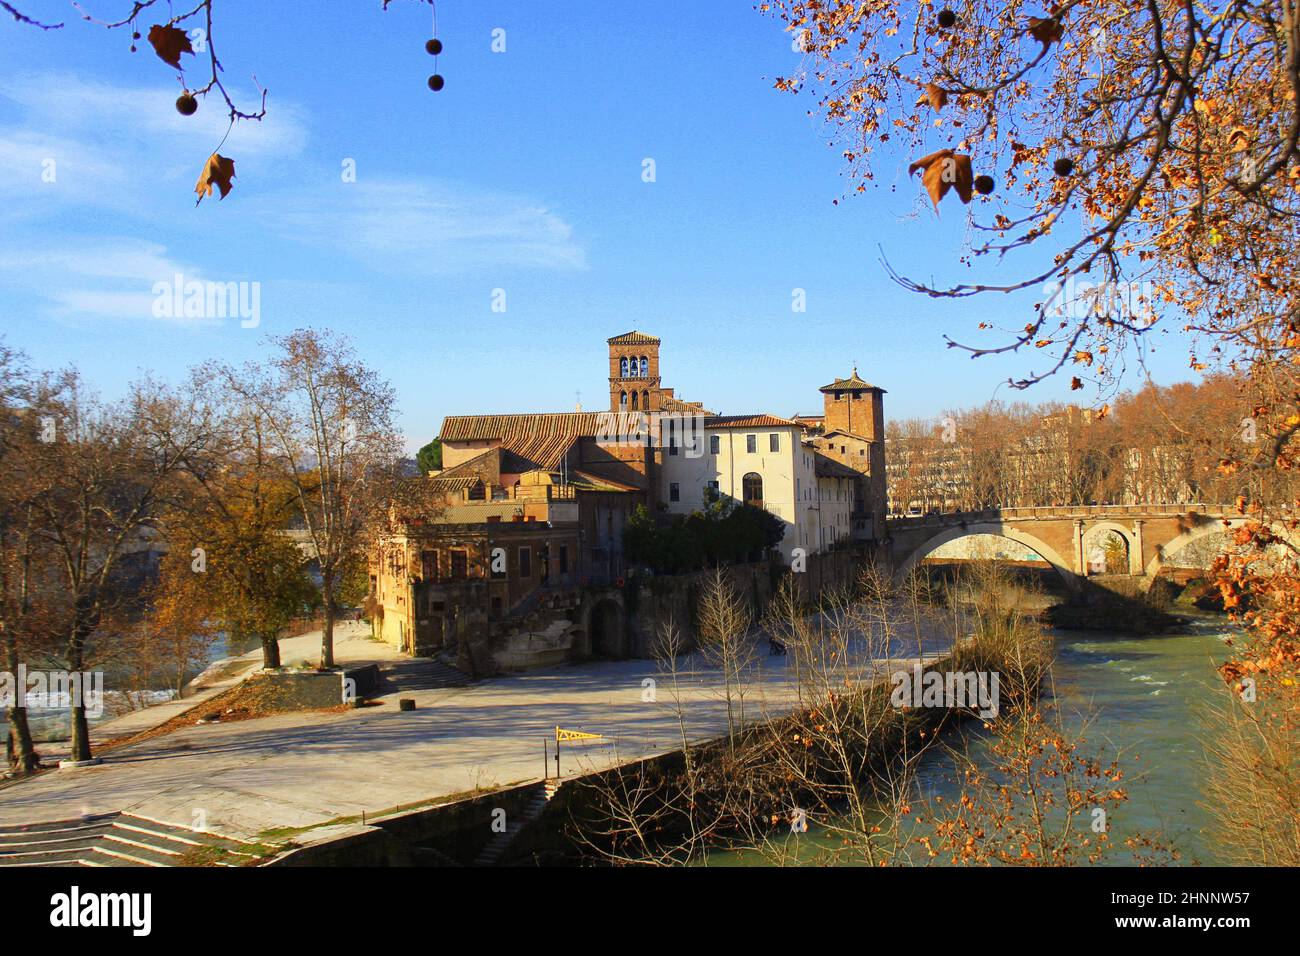 Tiberina Island (Isola Tiberina) on the river Tiber in Rome, Italy in autumn Stock Photo